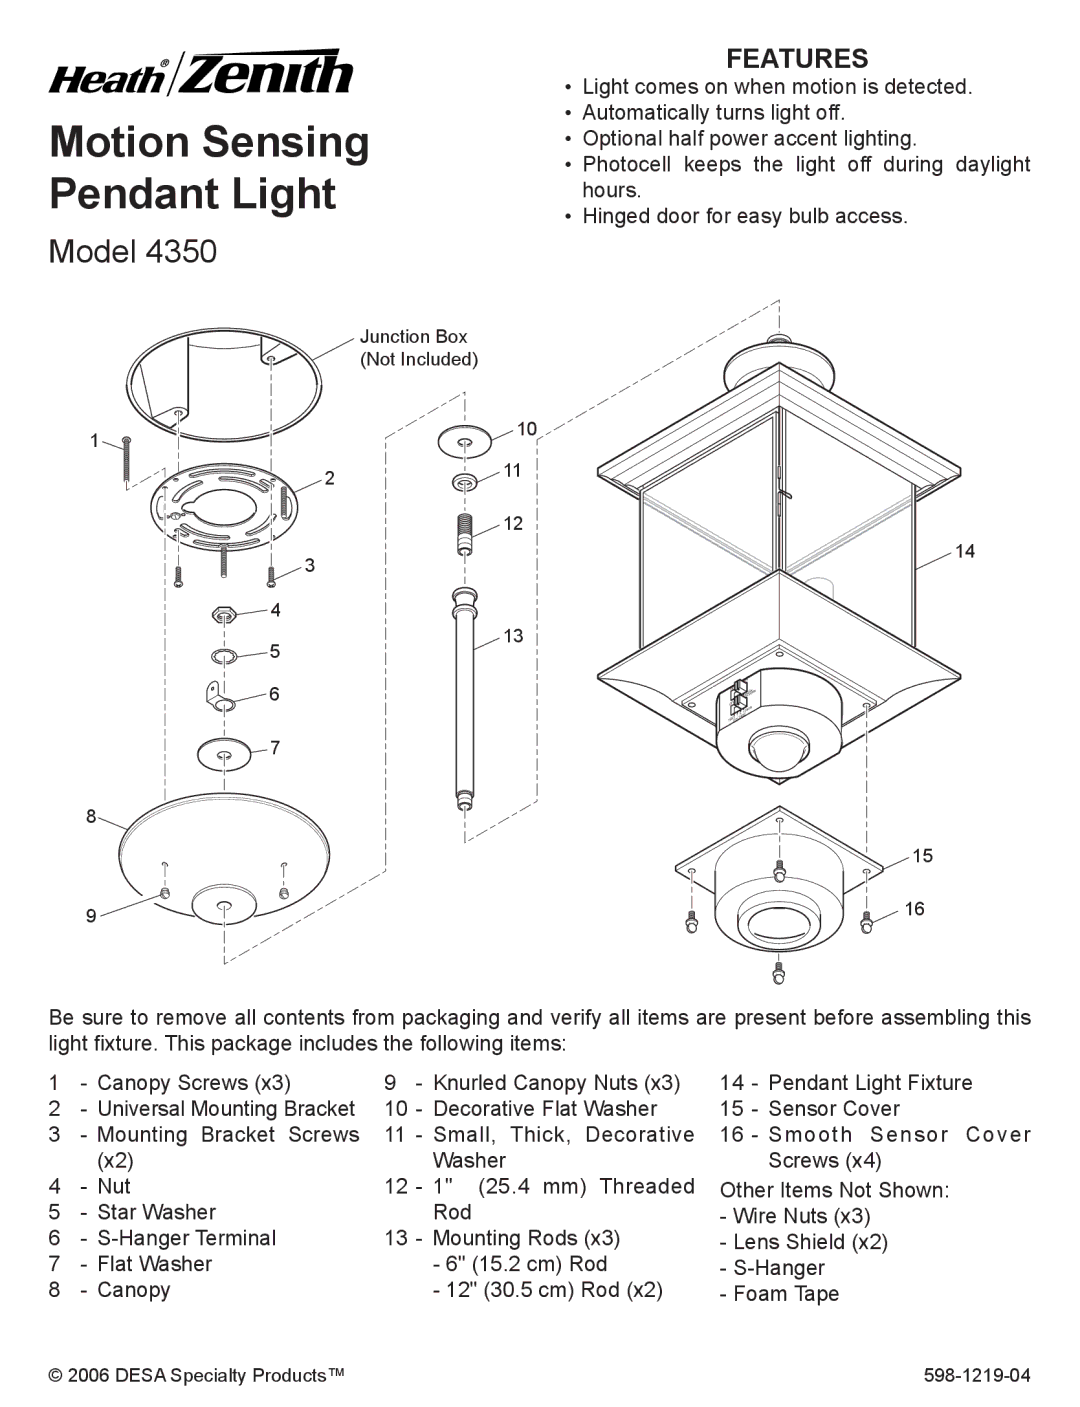 Heath Zenith 4350 manual Motion Sensing Pendant Light, Features 